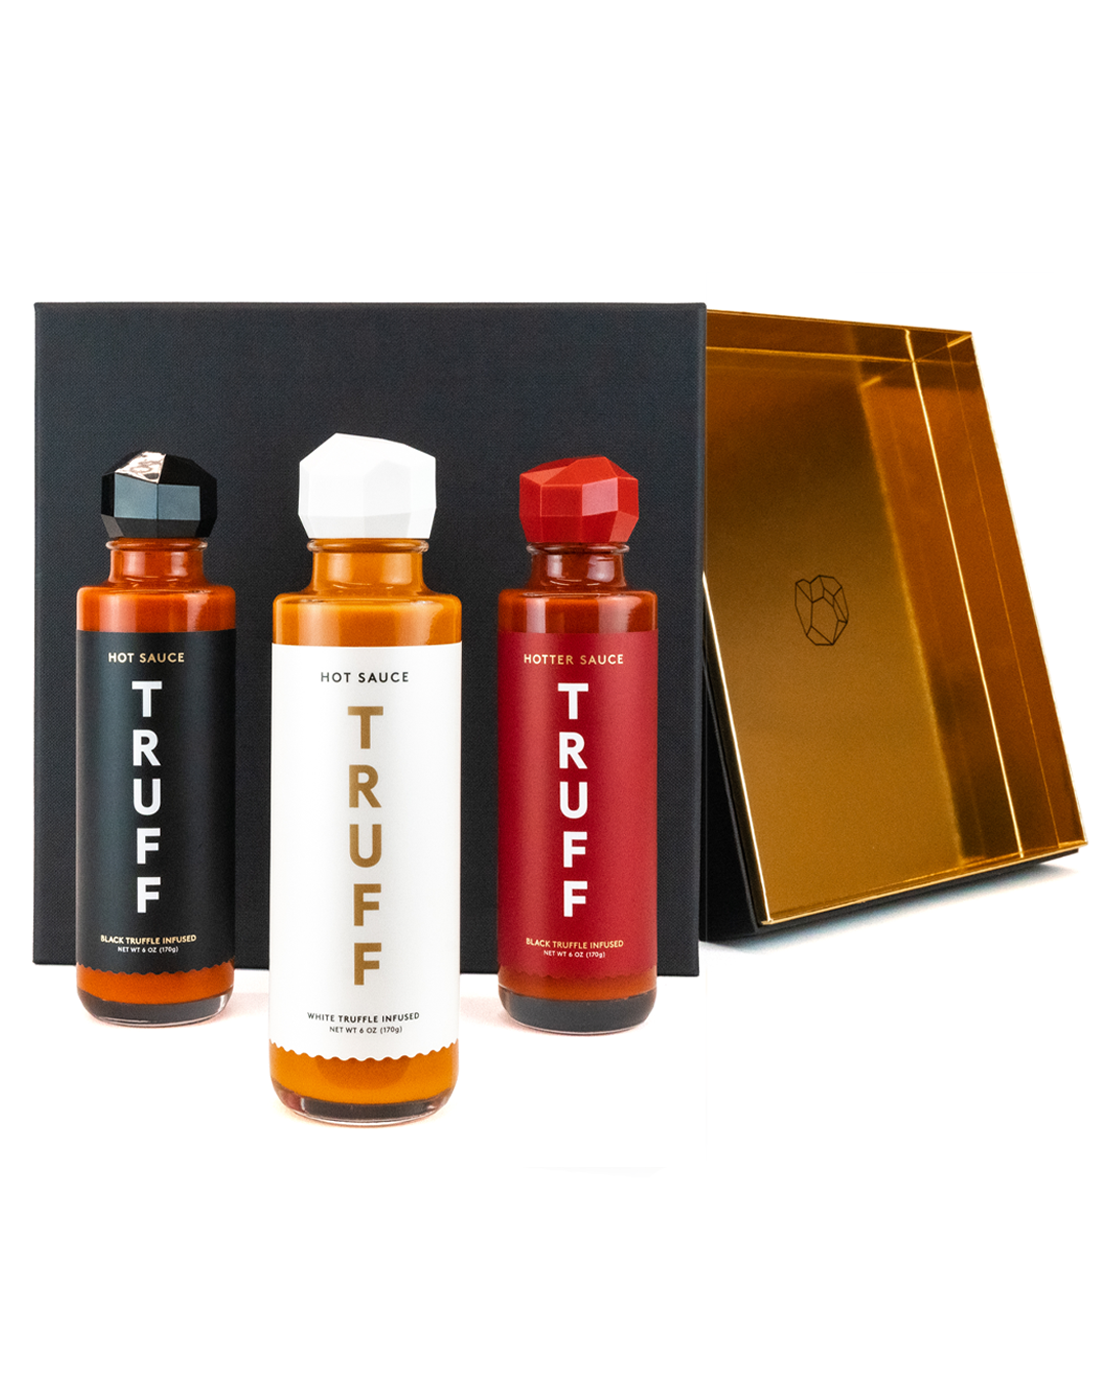 TRUFF Truffle Infused Hot Sauce Variety Pack Gluten Free